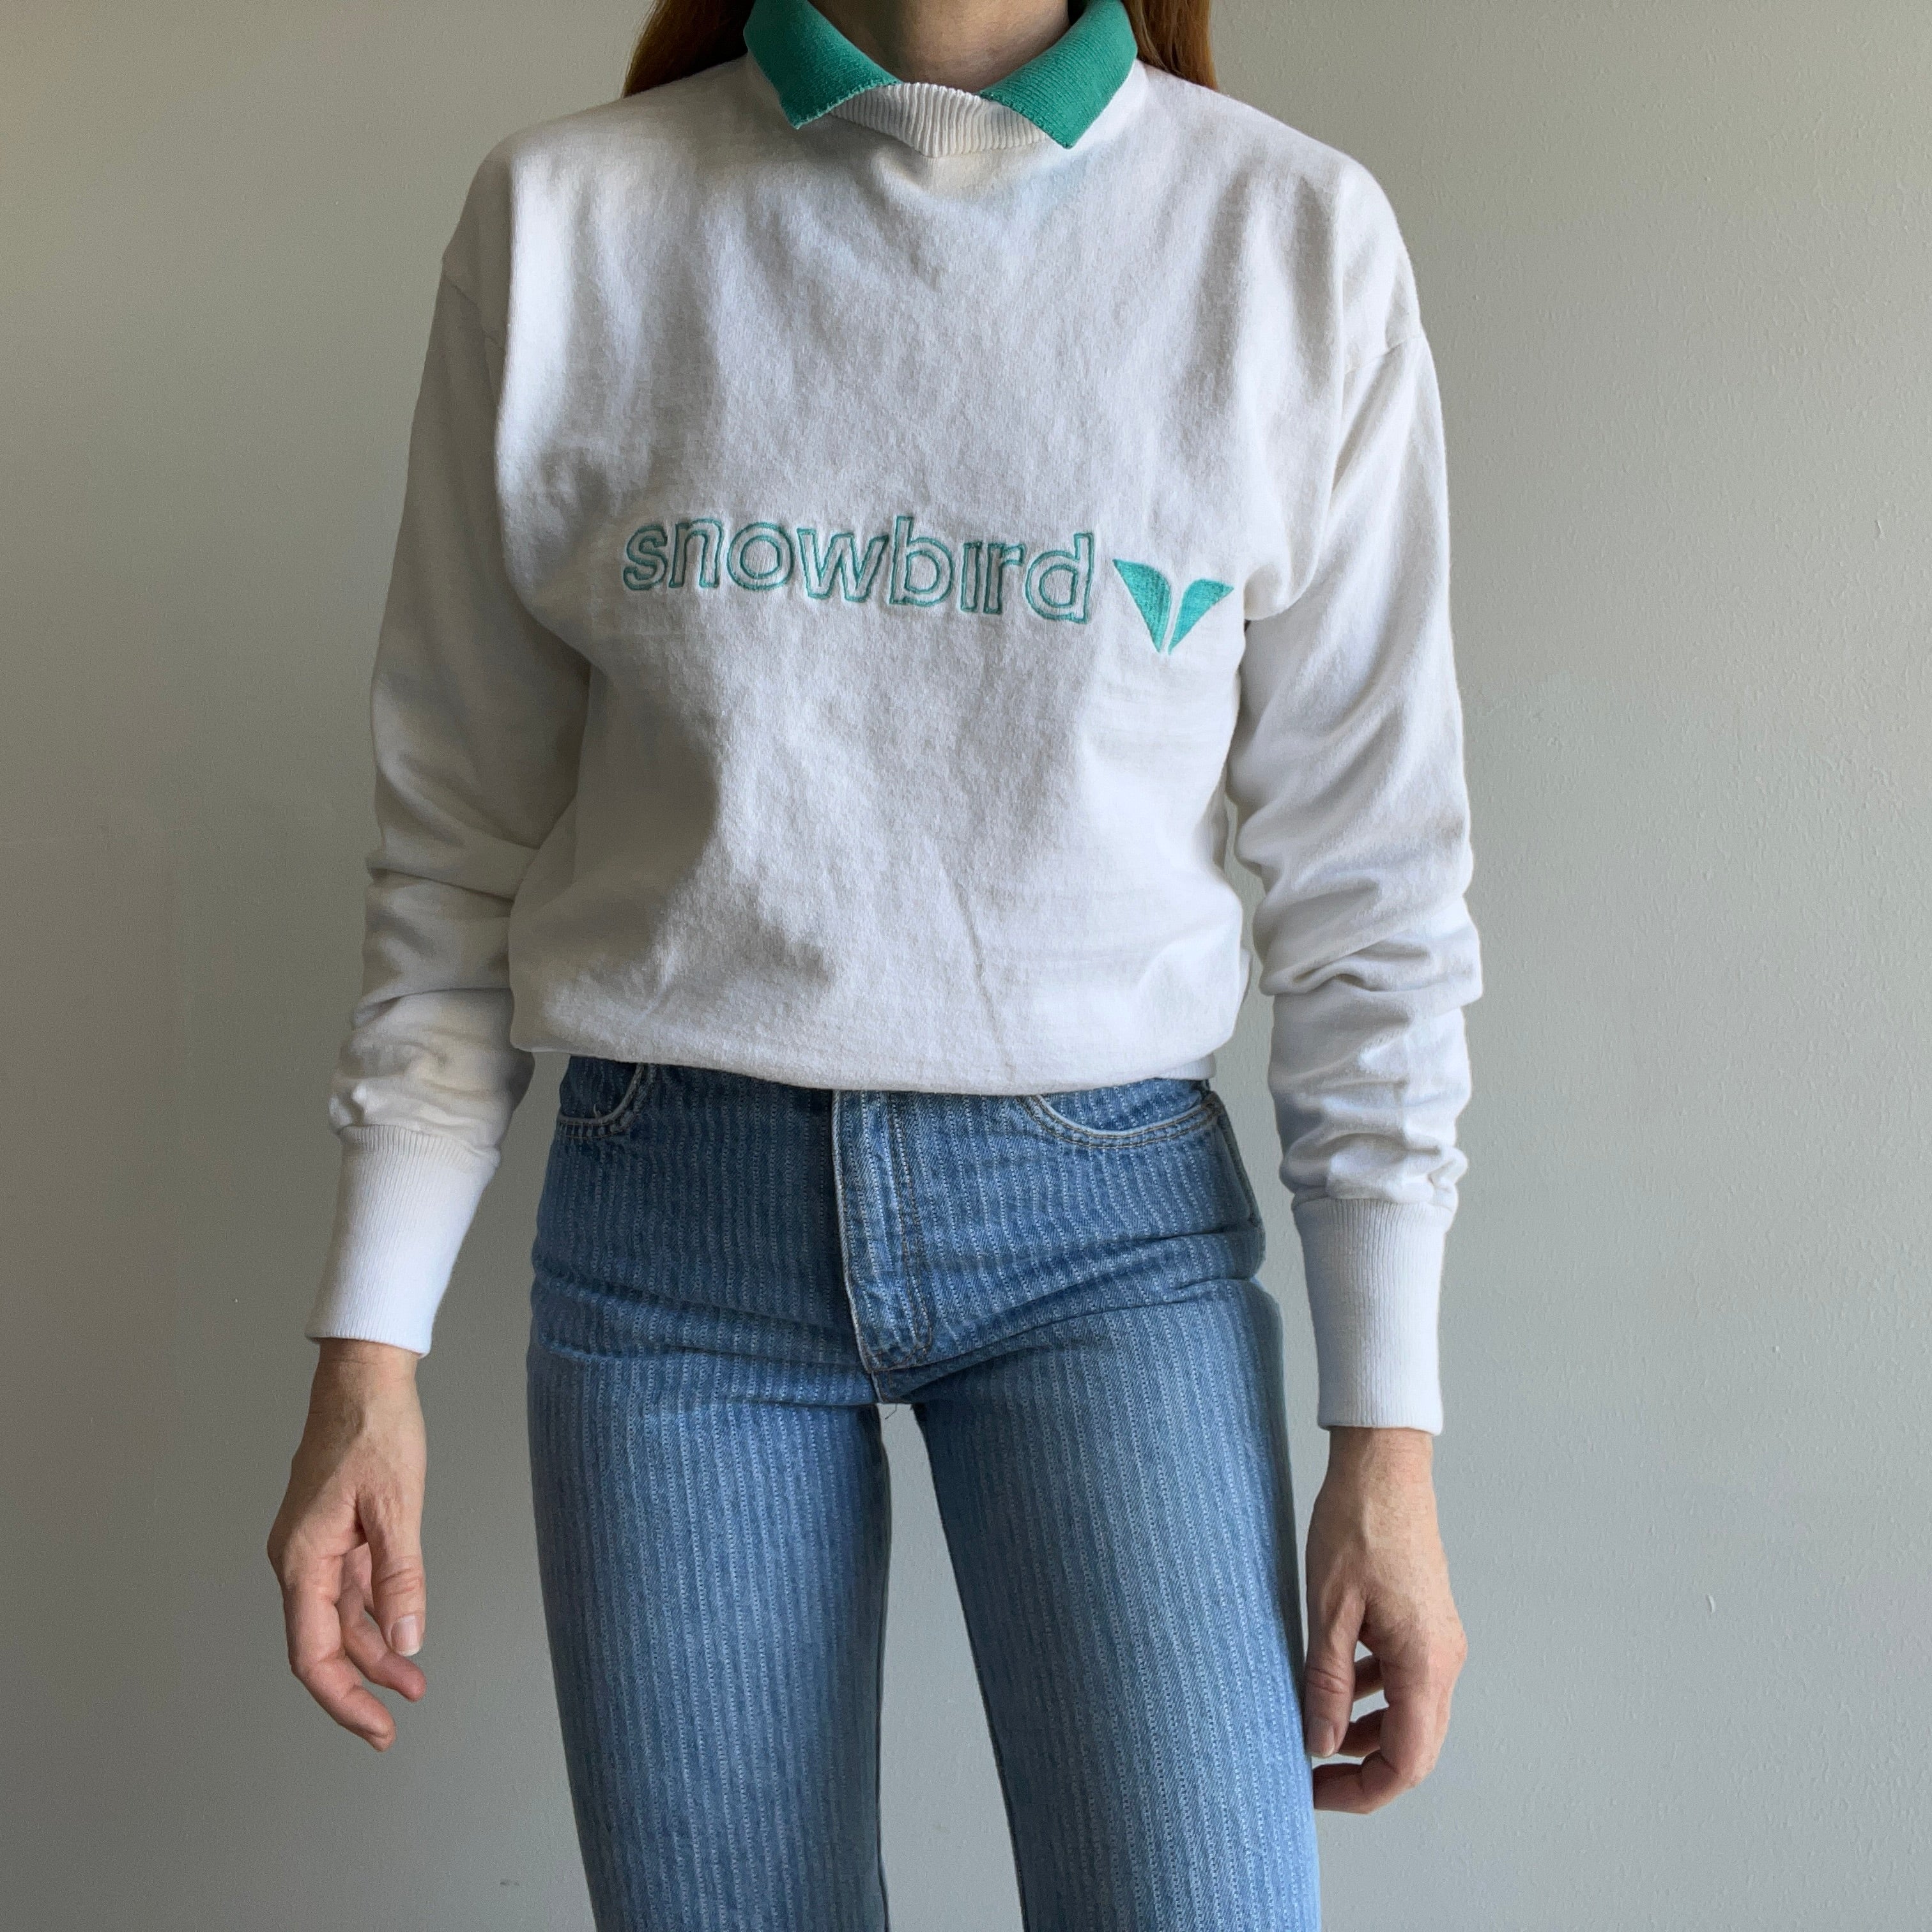 1980s Snowbird Polo Rugby Fabric Sweatshirt - WOW